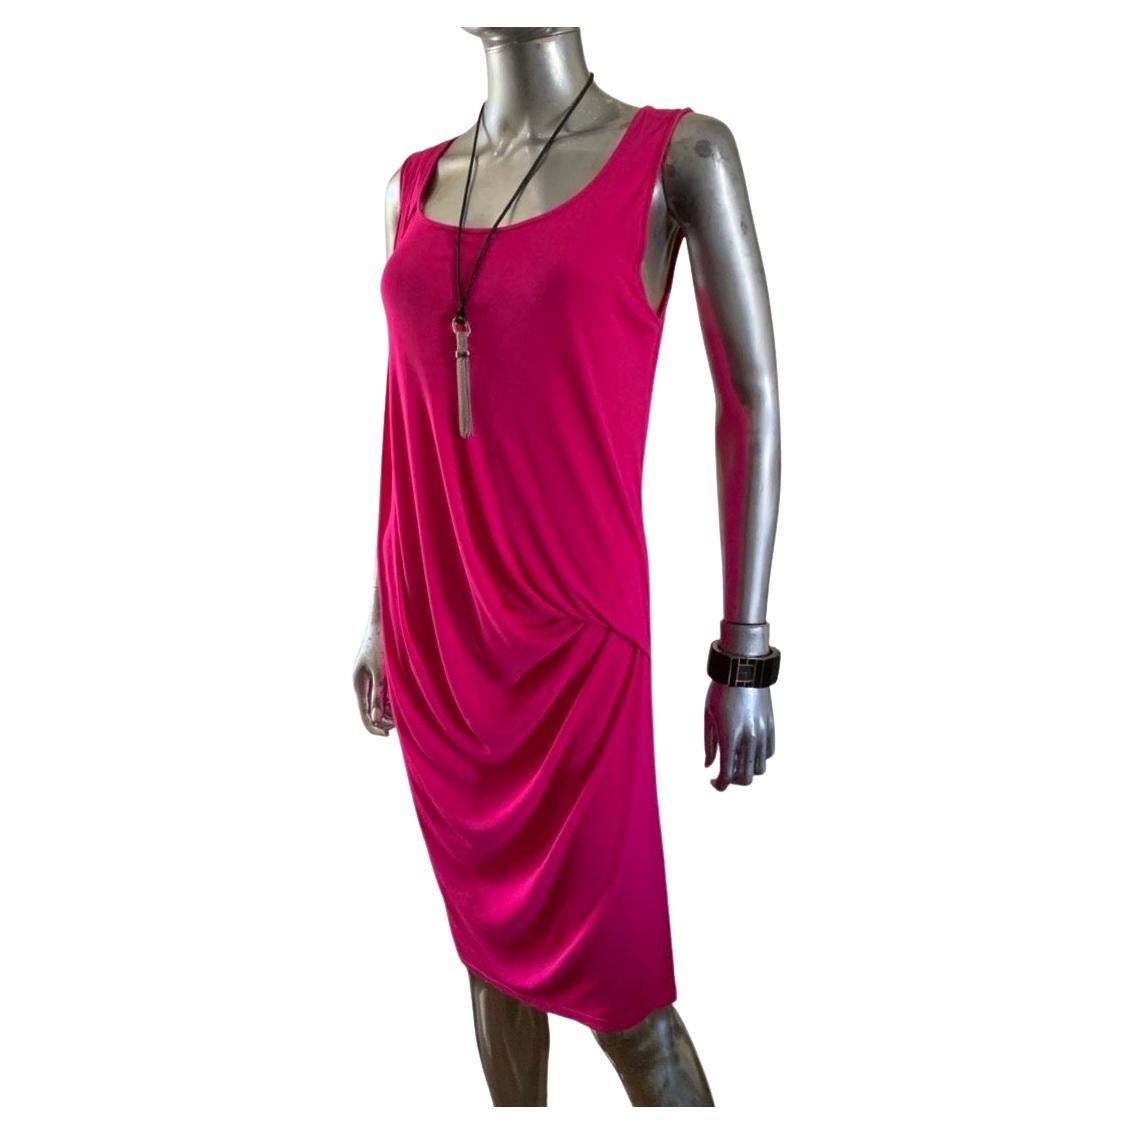 Michael Kors Collection Italy Fuchsia Pink Draped Jersey Dress  Size 2